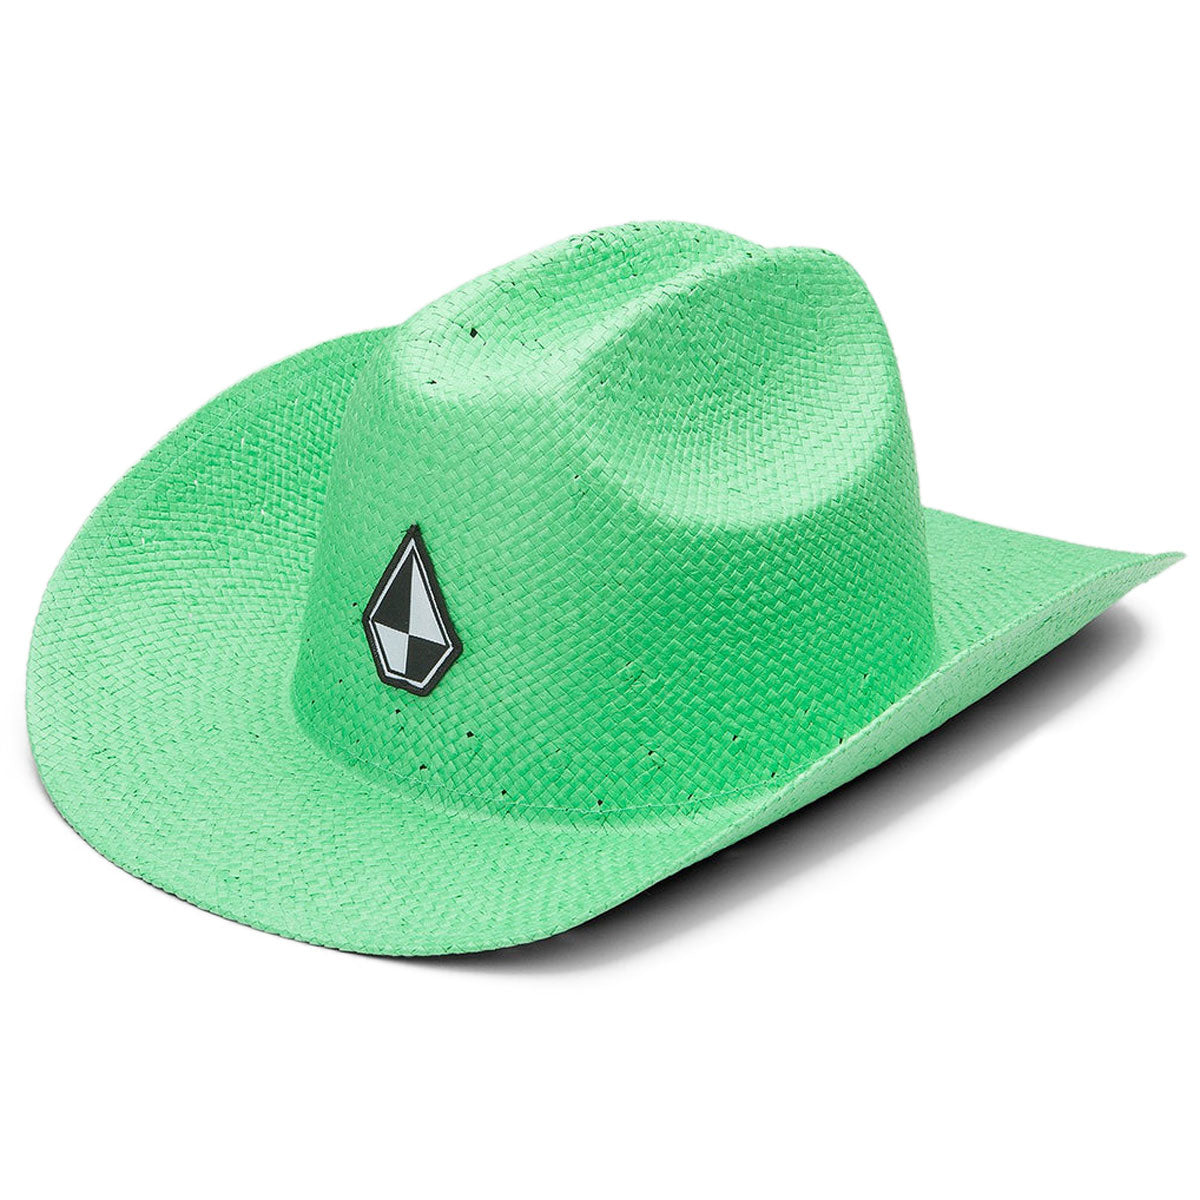 Volcom x Schroff Straw Hat - Dusty Aqua image 1